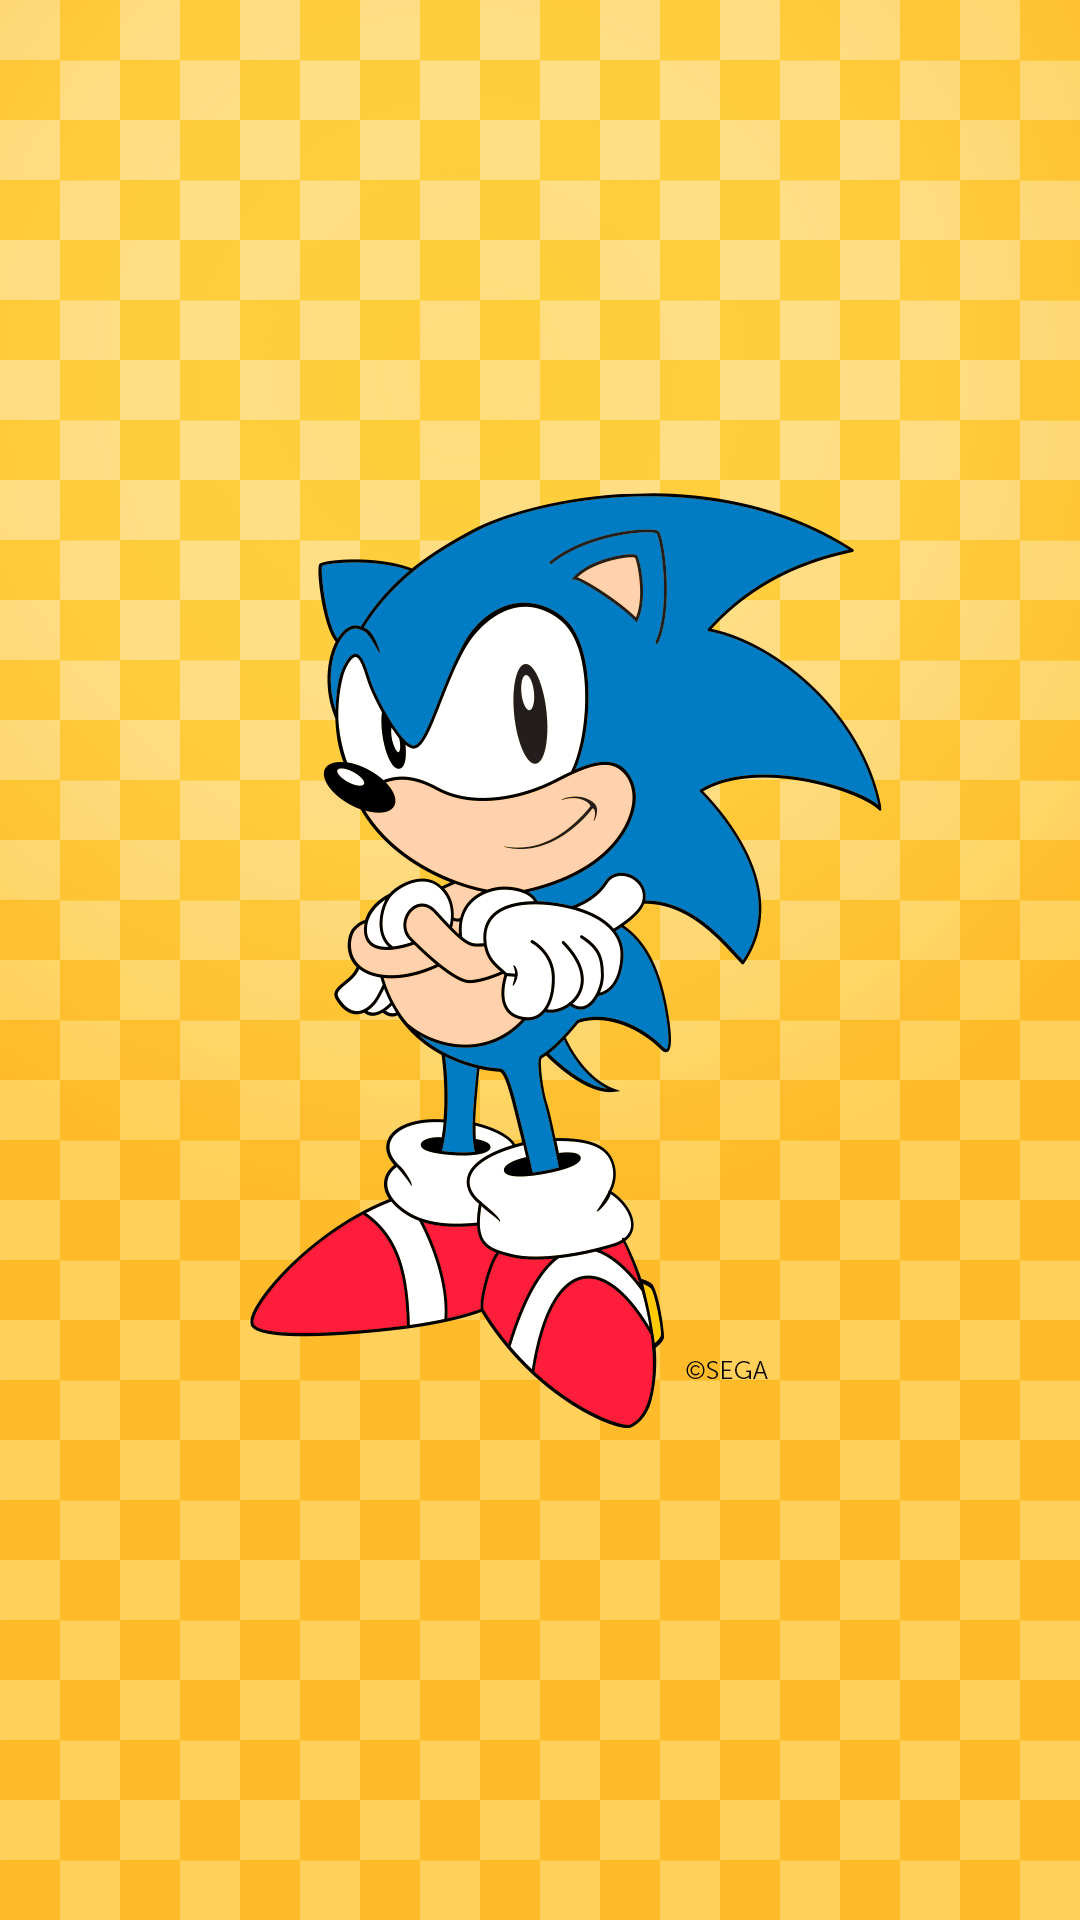 Sonic the hedgehog wallpaper - Sonic